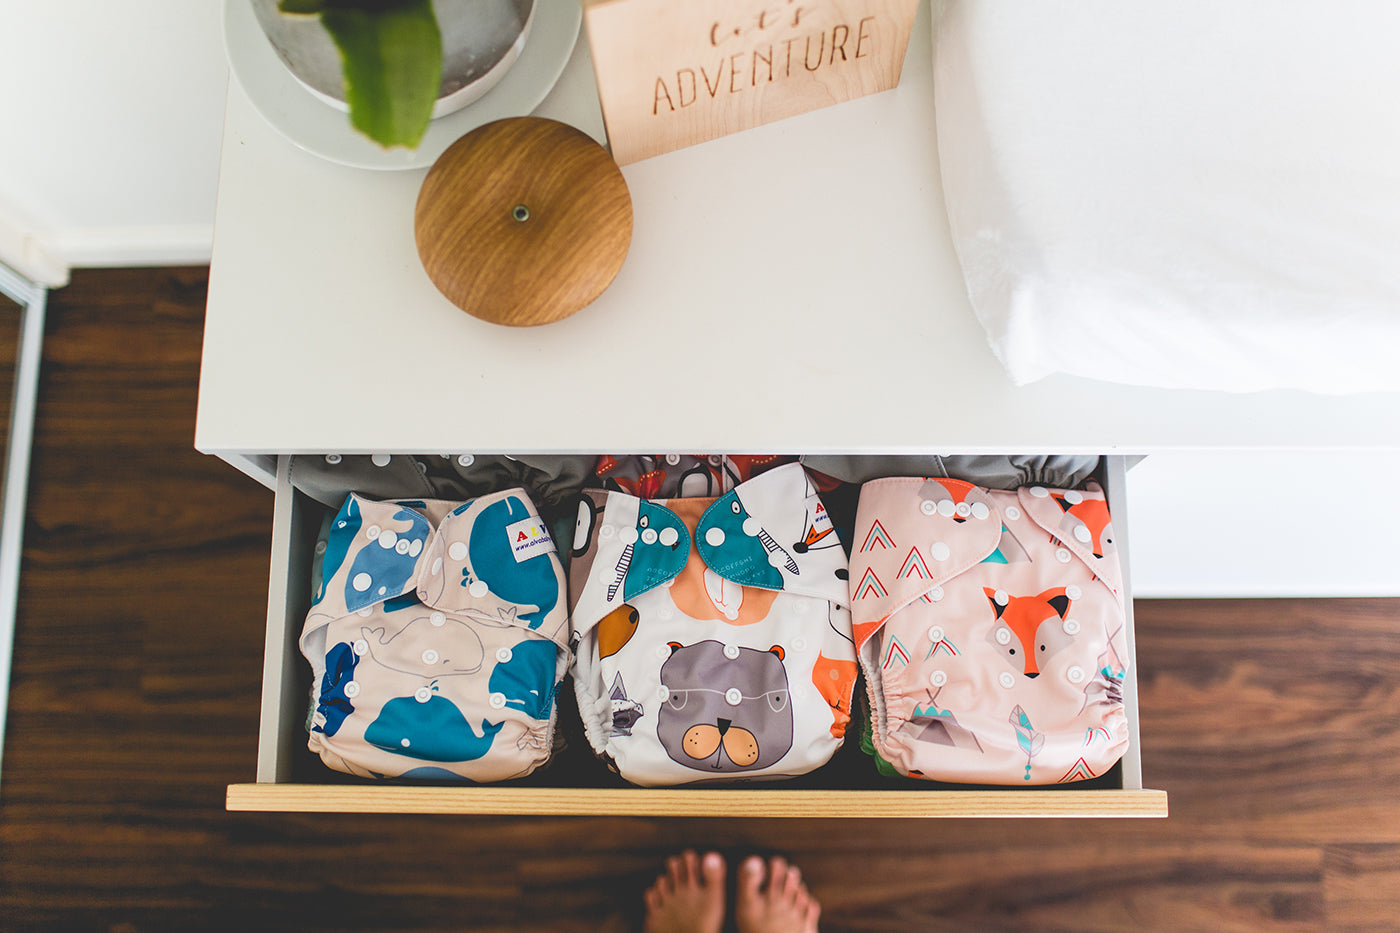 Nursery Storage Ideas – Happiest Baby